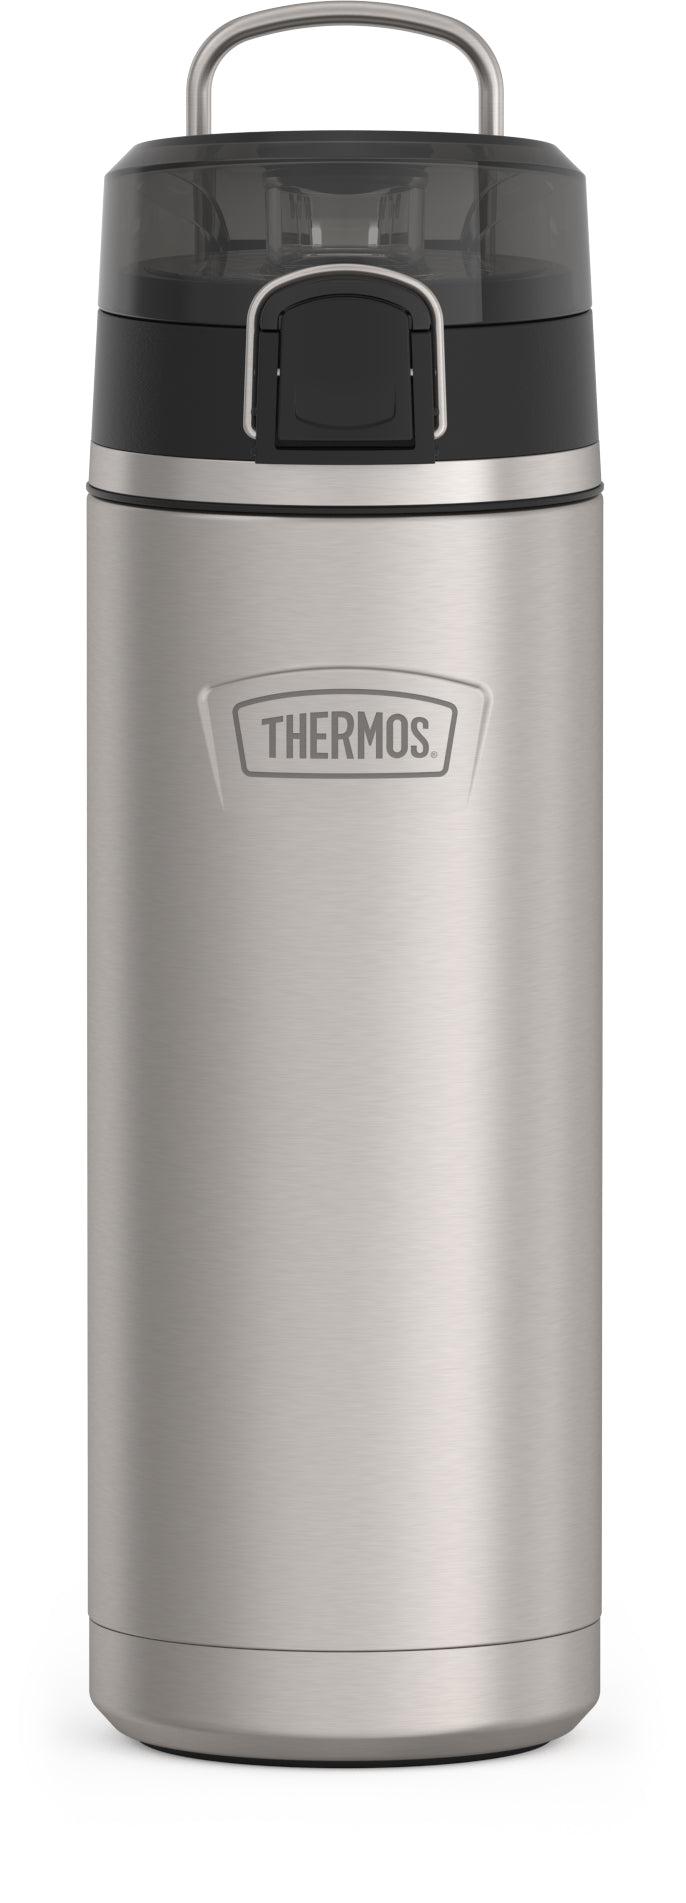 Thermos 16 oz. Icon Stainless Steel Travel Mug - Granite